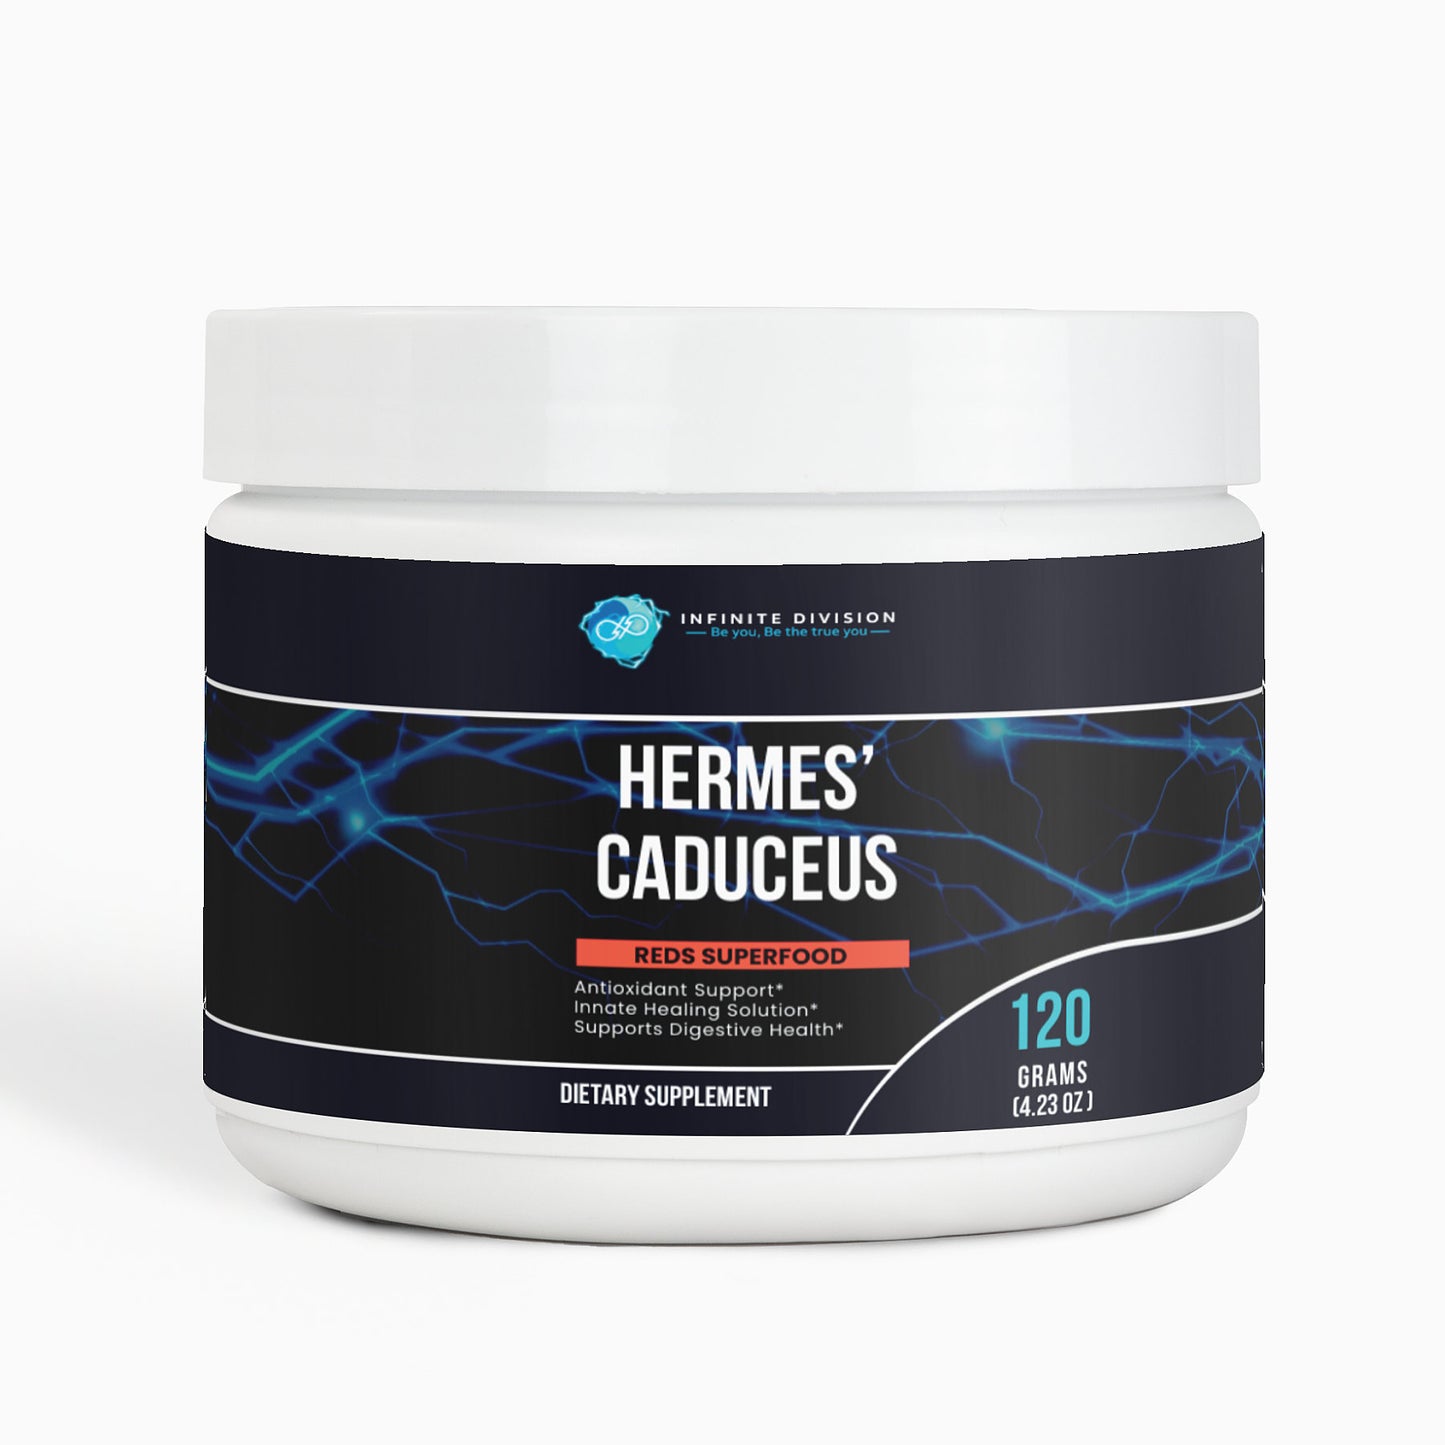 Hermes' Caduceus - Reds Superfood